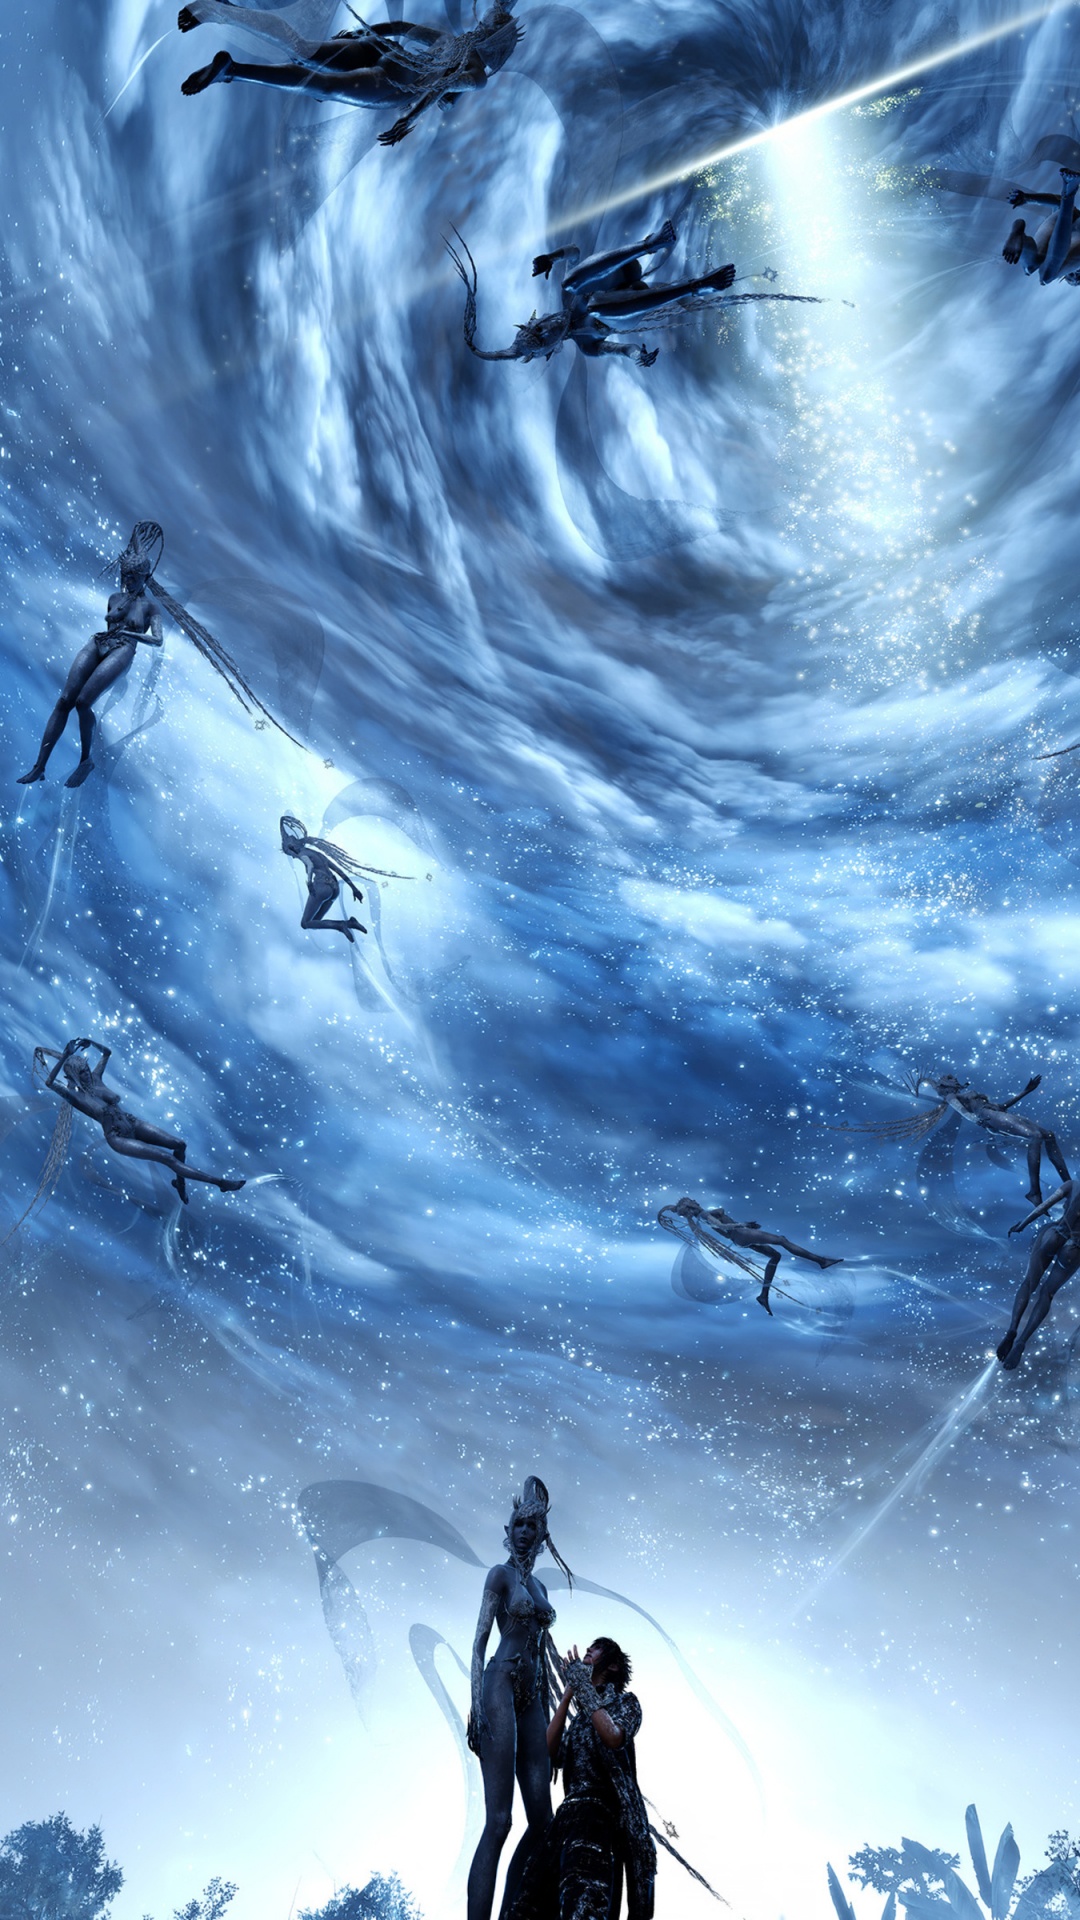 Final Fantasy Xv, Final Fantasy VII Remake, Illustration, Space, Mythology. Wallpaper in 1080x1920 Resolution